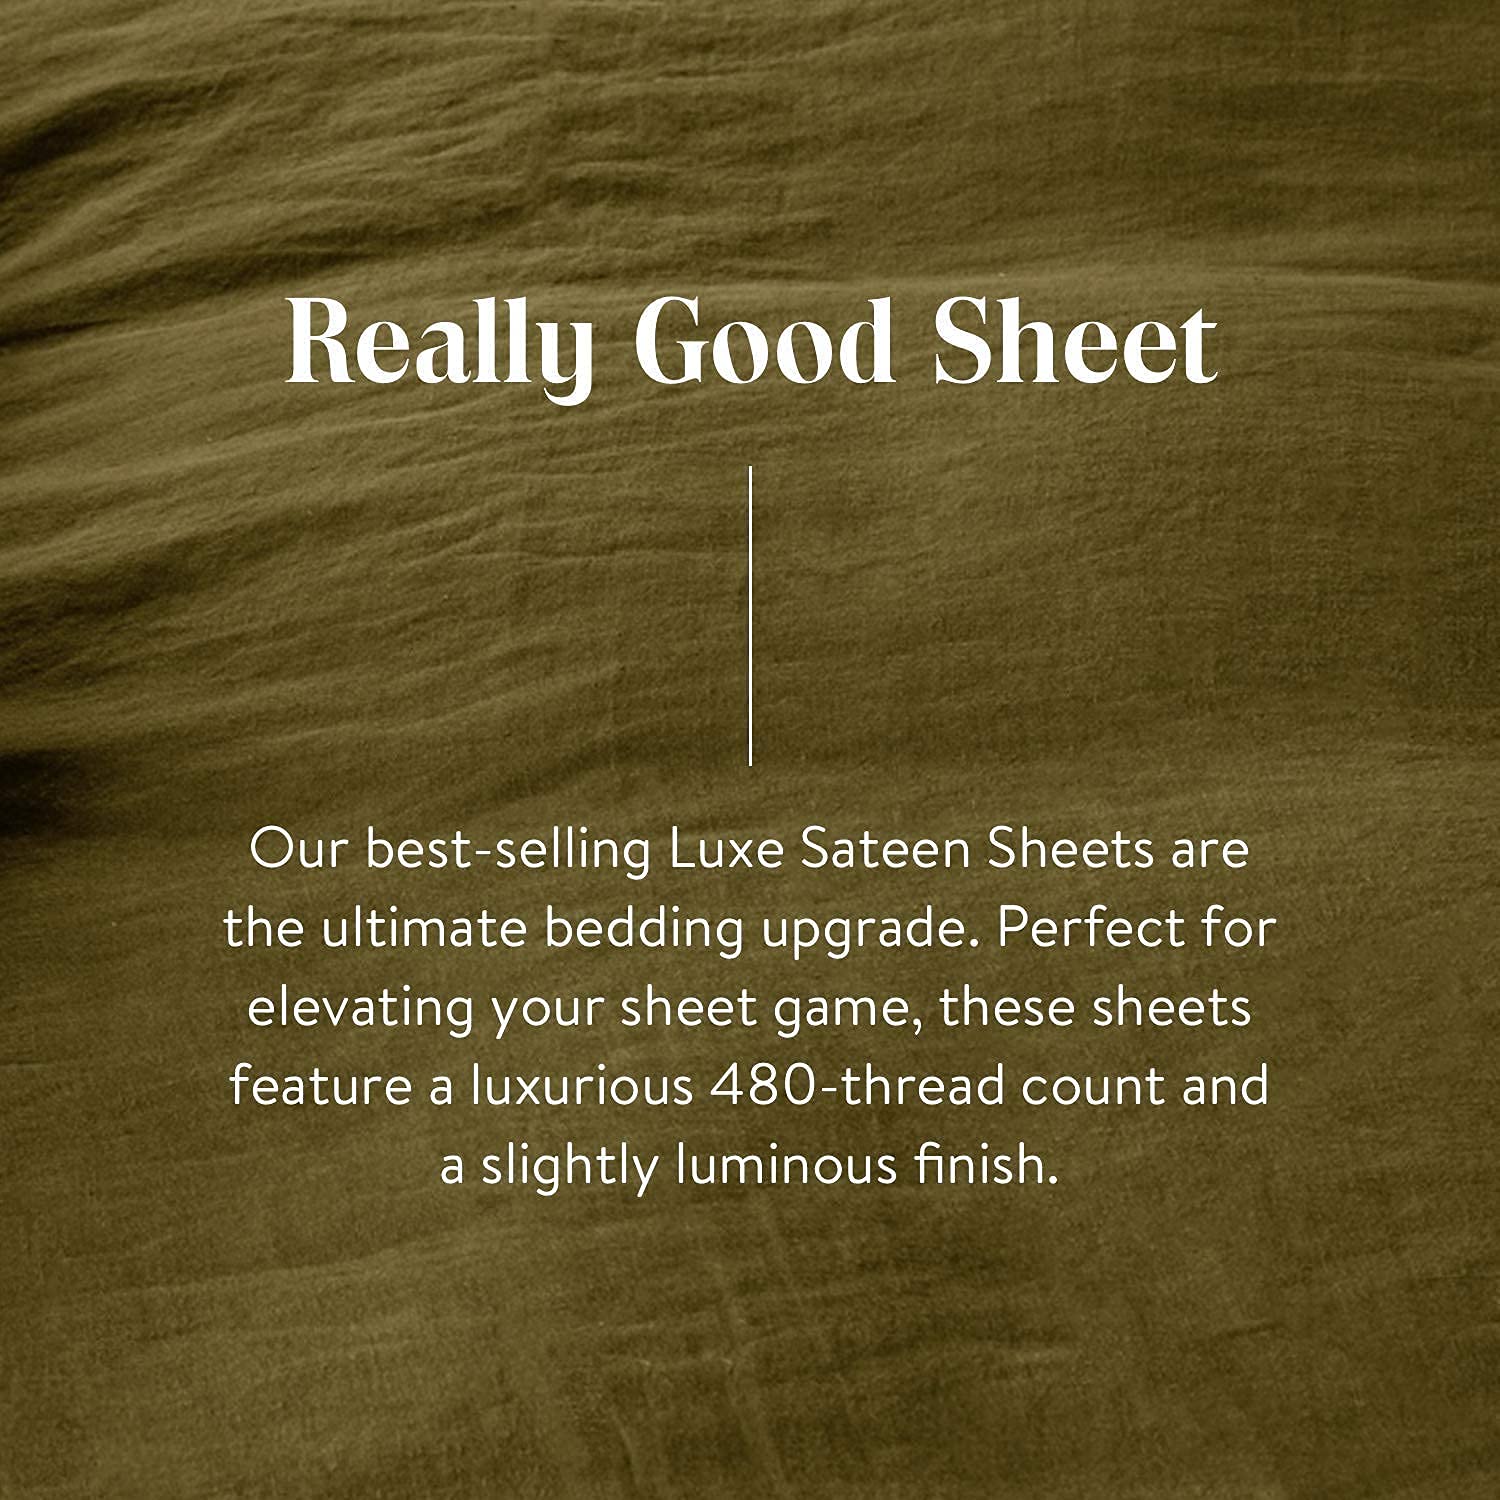 Brooklinen Luxury Sateen 4 Piece Sheet Set - 100% Cotton, Twin Size in Cream - 1 Fitted Sheet, 1 Flat Sheet, 2 Pillowcases | Best Luxury Sheets